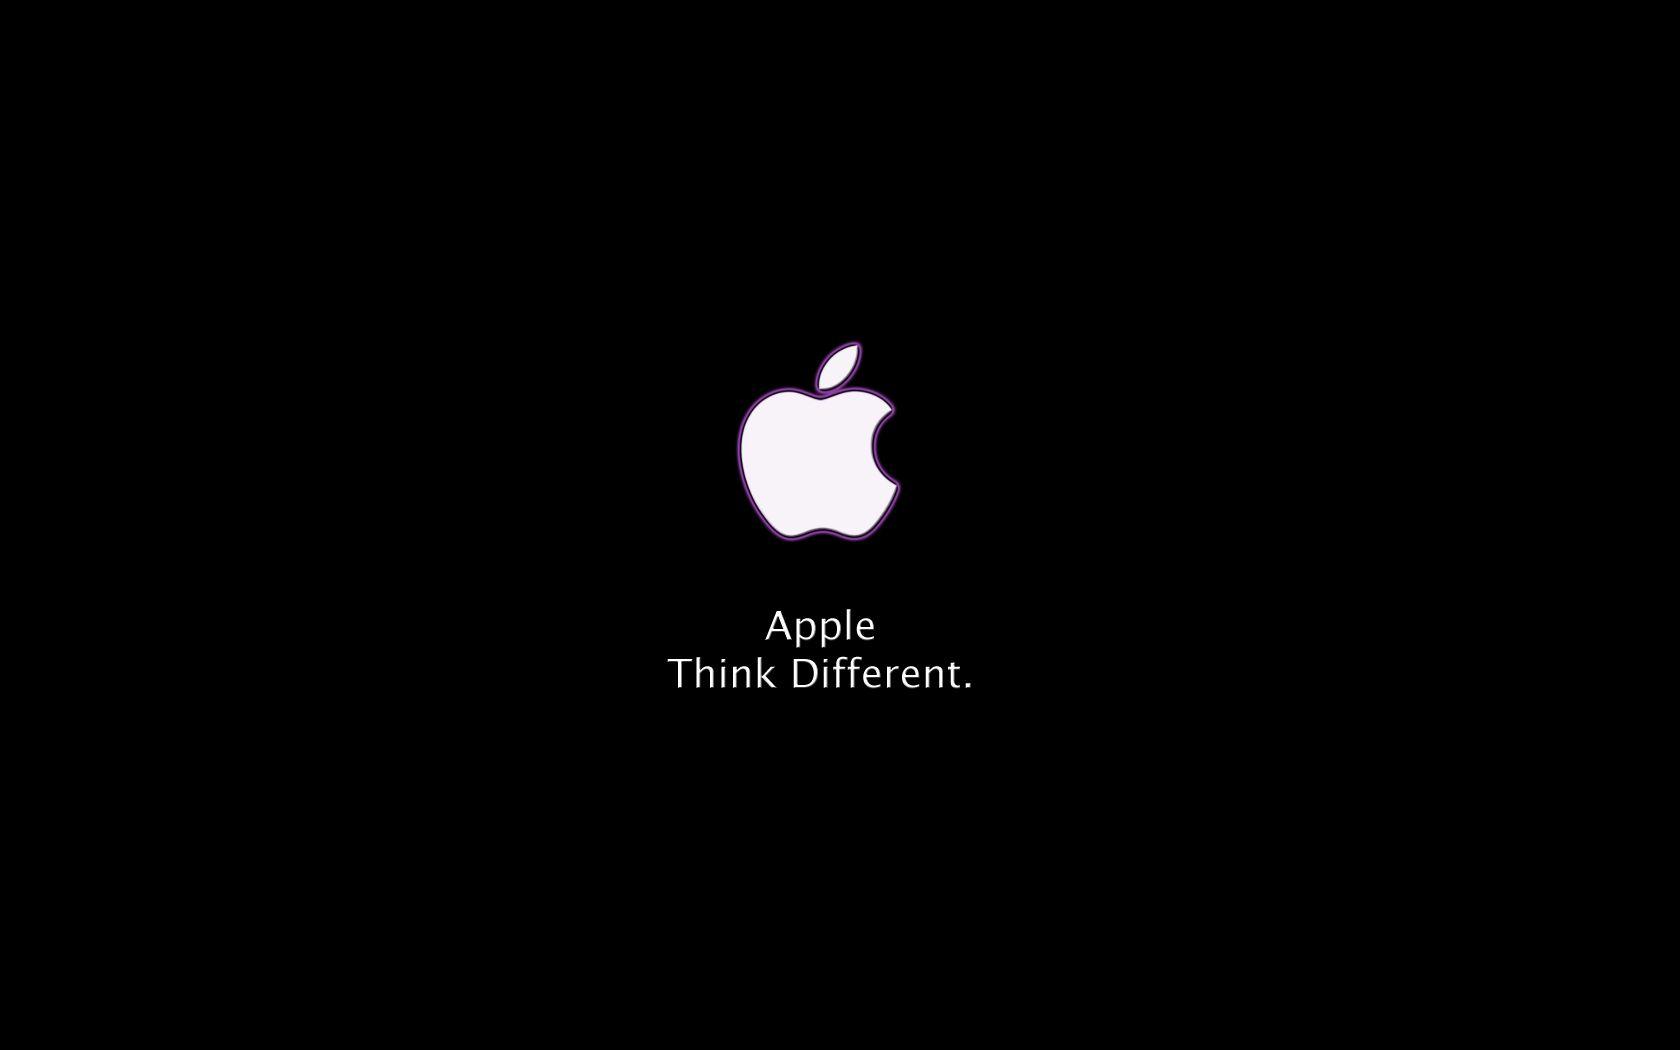 Technology Think Different Apple wallpaper Desktop, Phone, Tablet